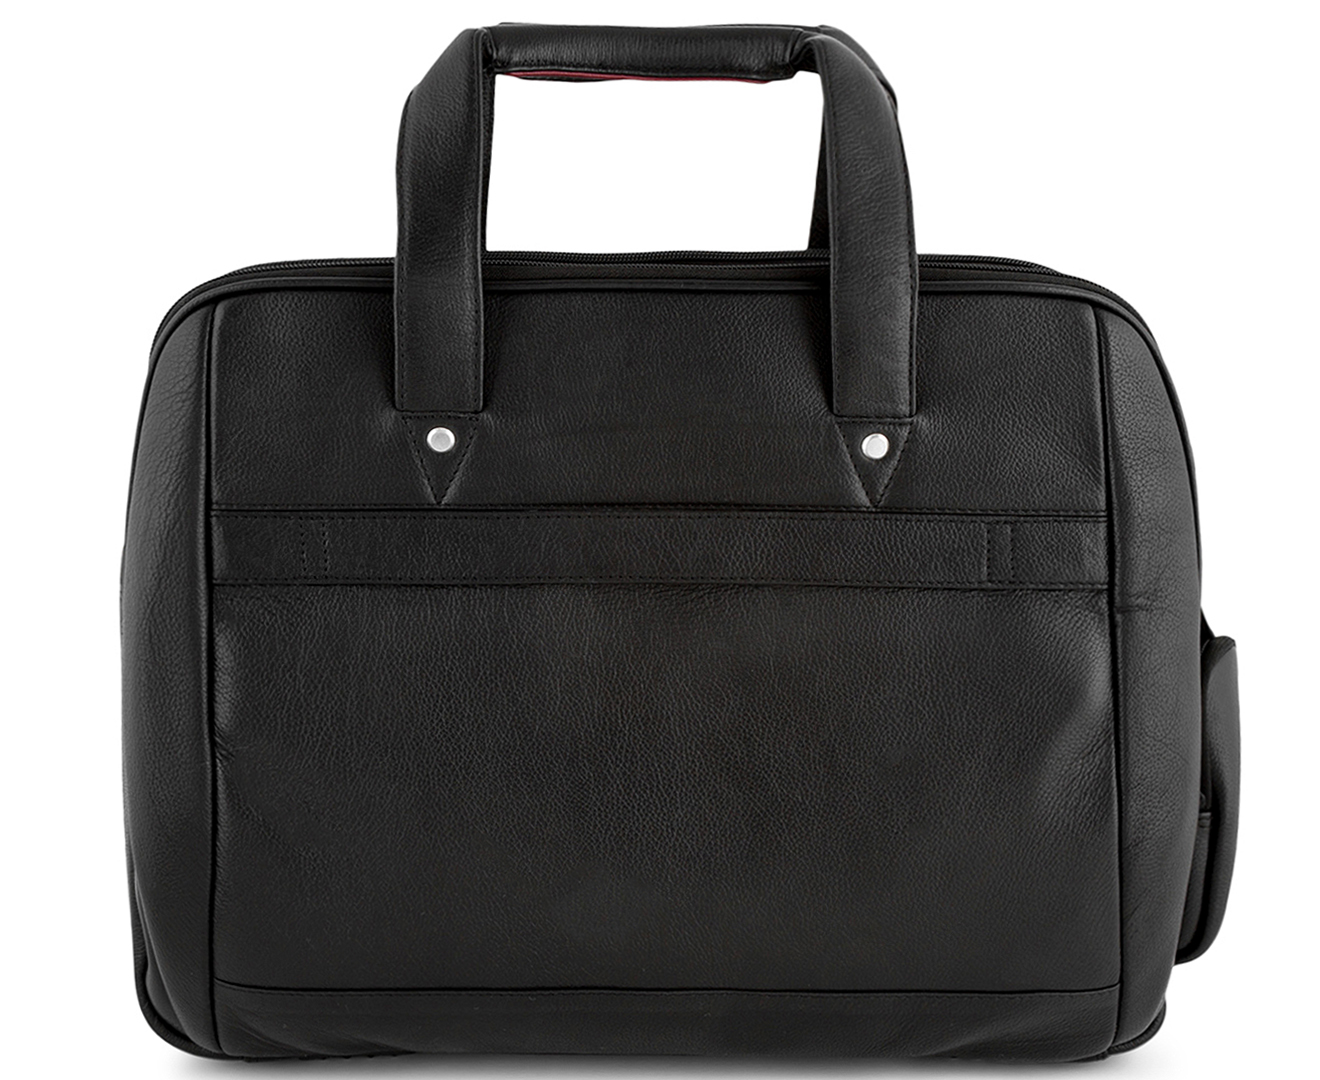 Tosca Leather Curved Folio Bag - Black | Catch.co.nz